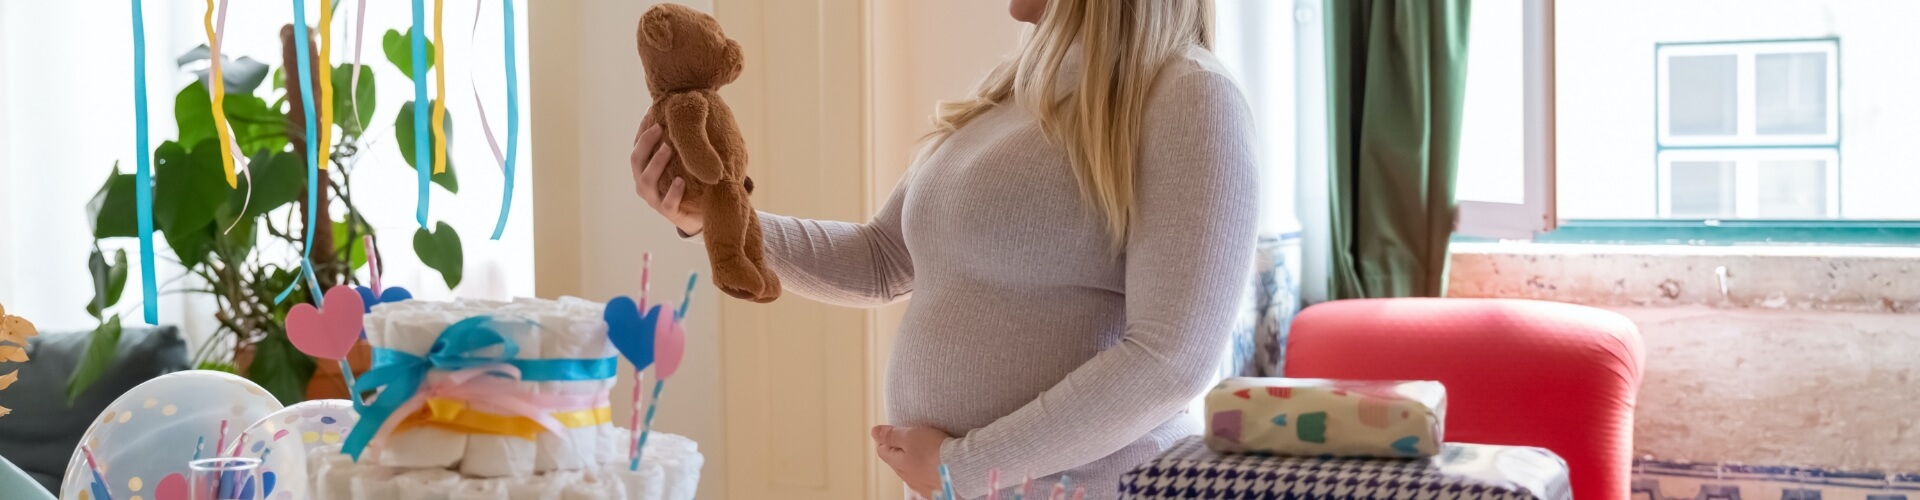 Pregnant Woman in Nursery Holding Teddy Bear